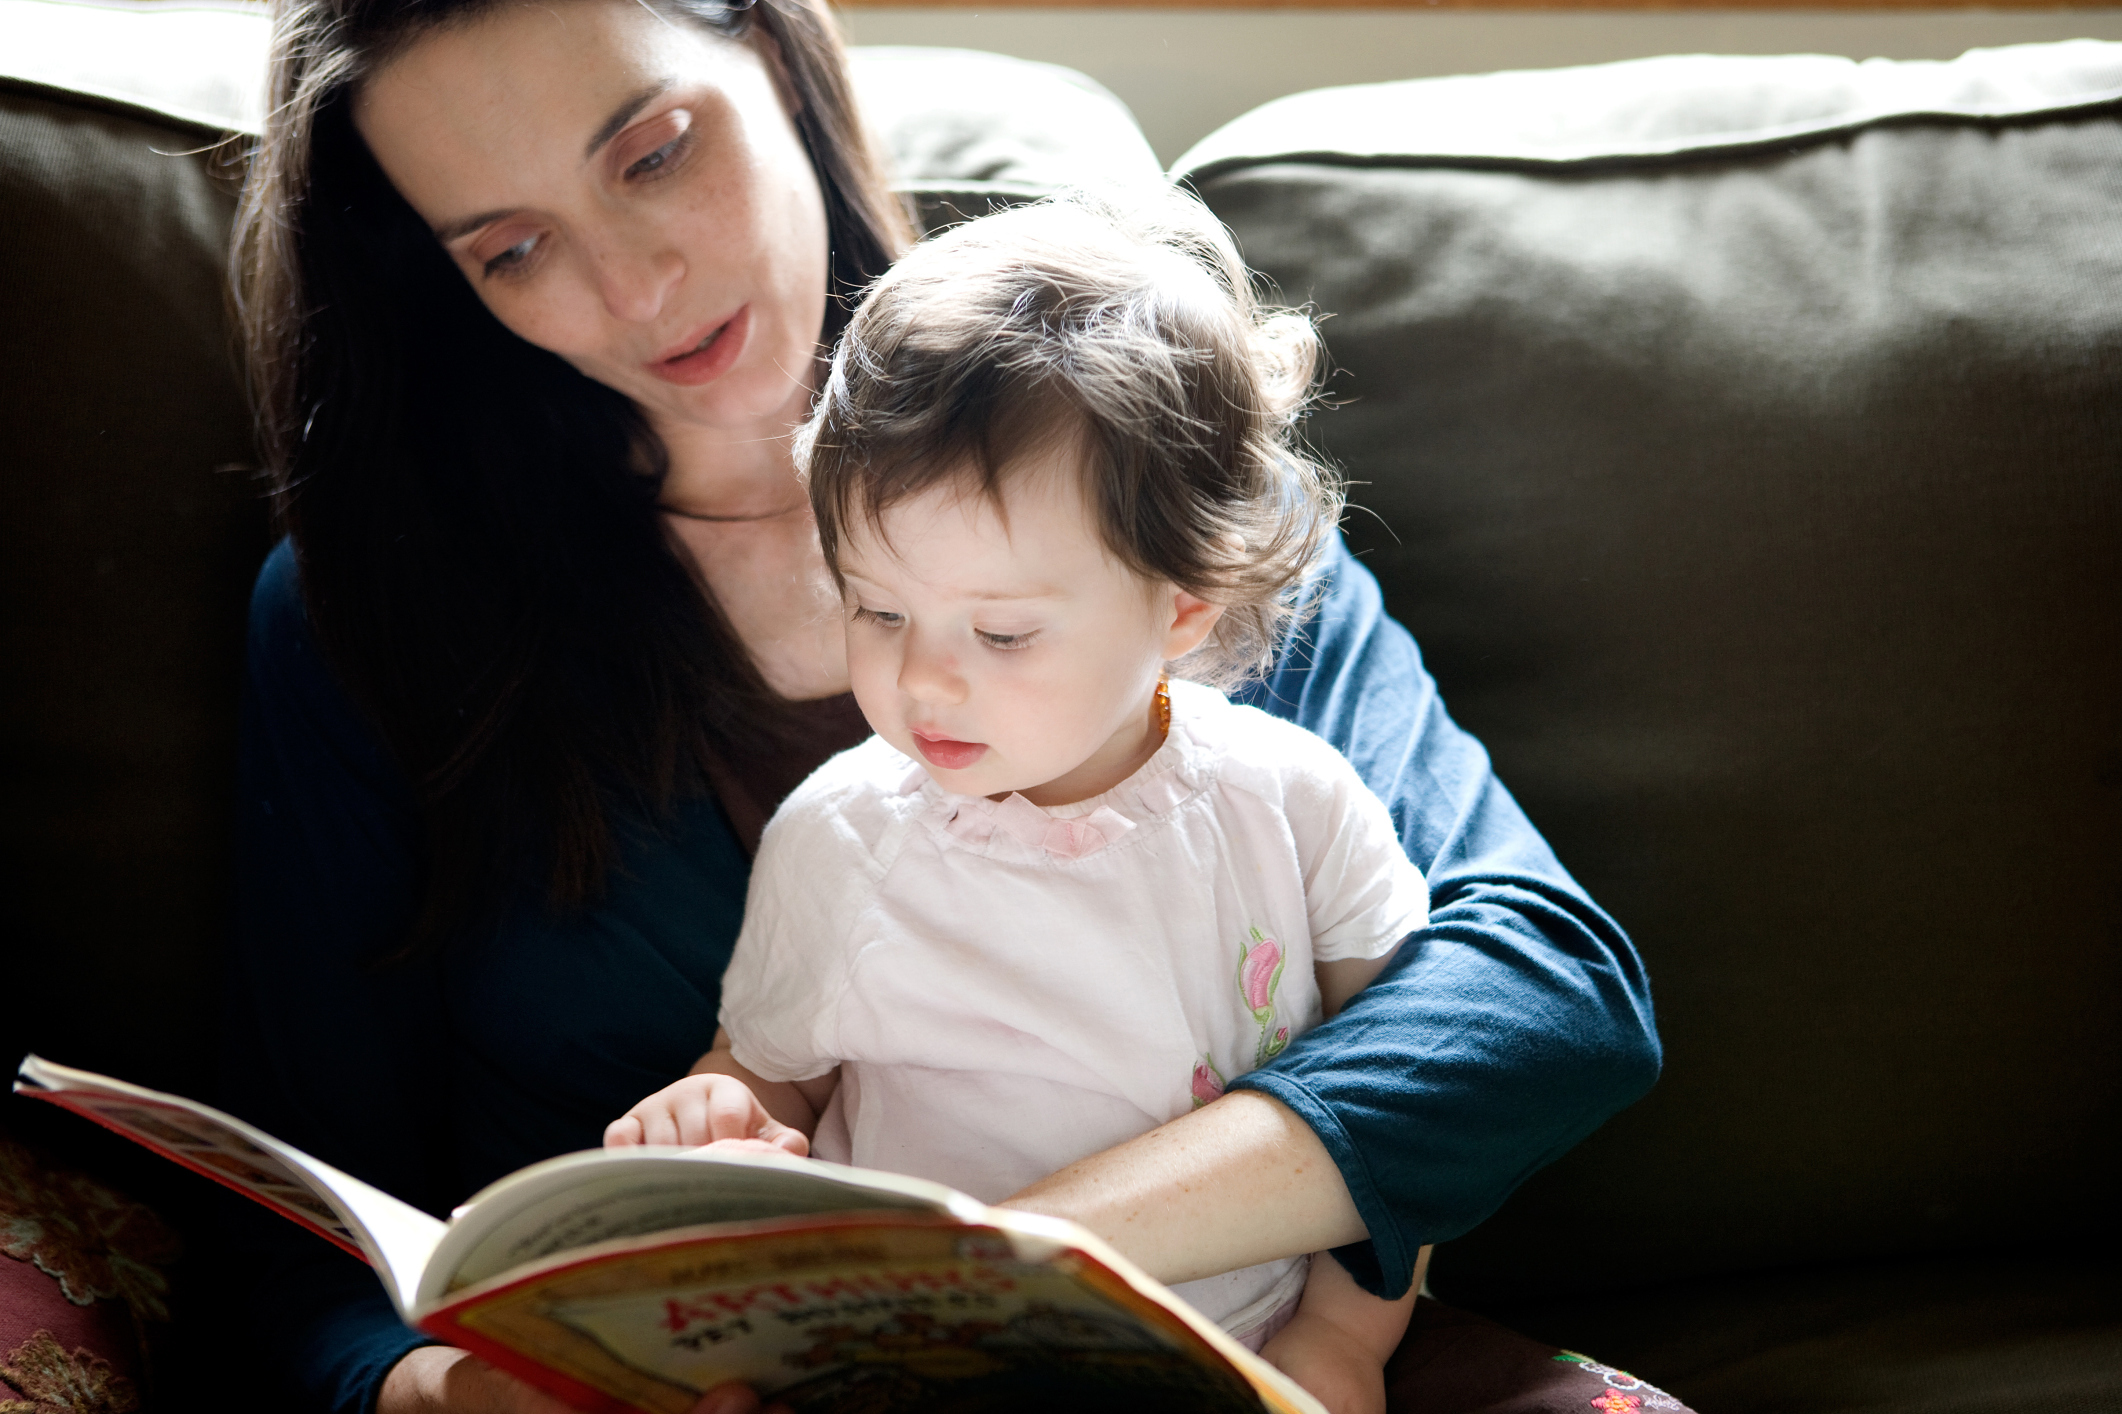 Pediatricians urge parents to read to infants